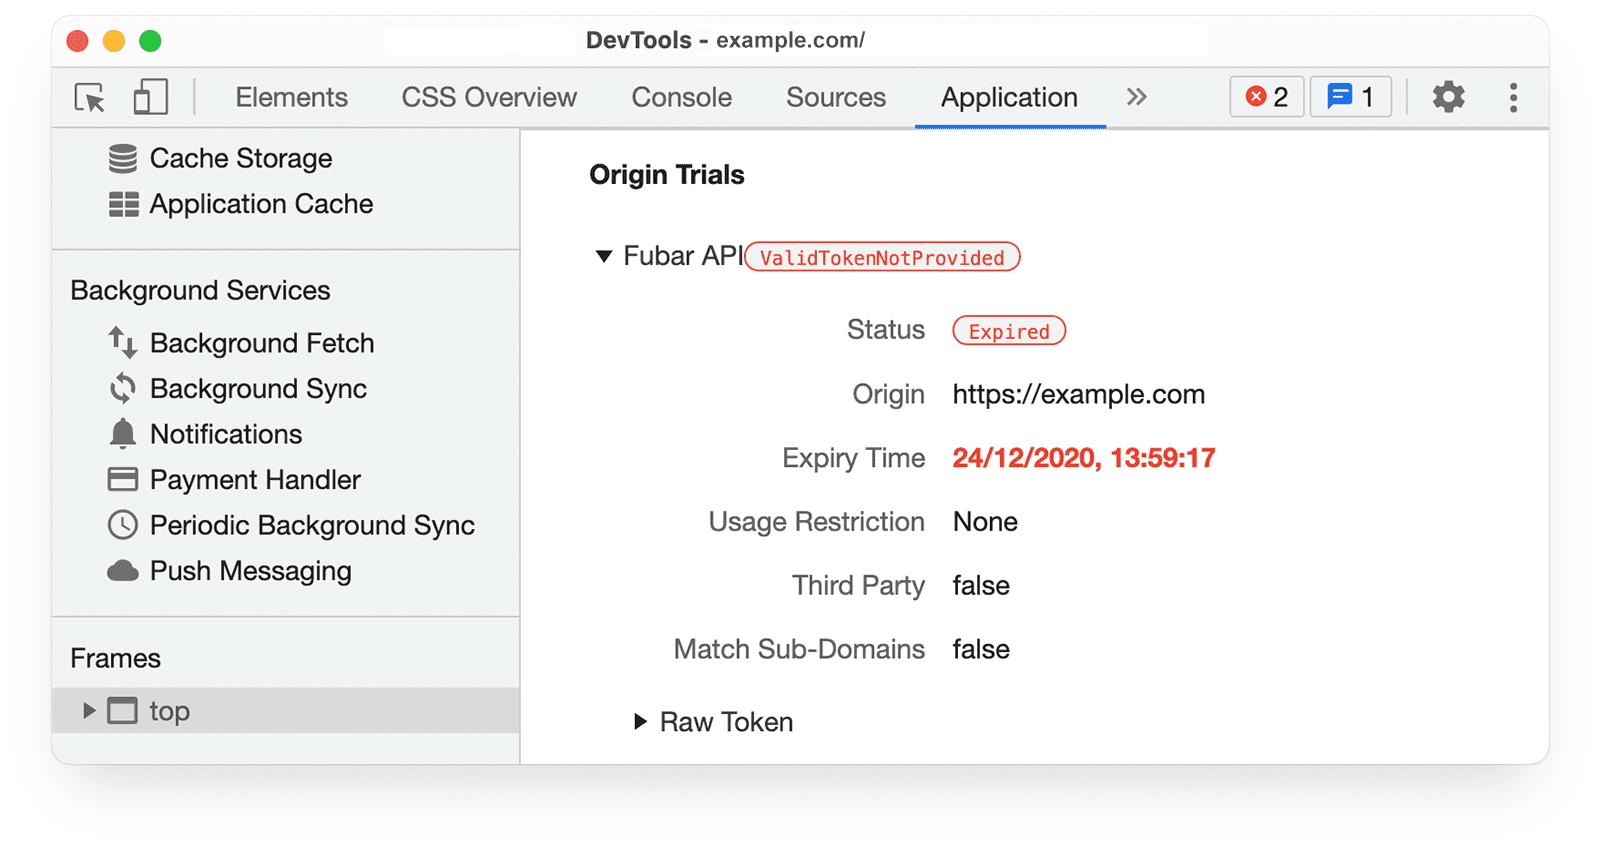 Chrome DevTools 
origin trials information in the Application panel, highlighting Status: Success.